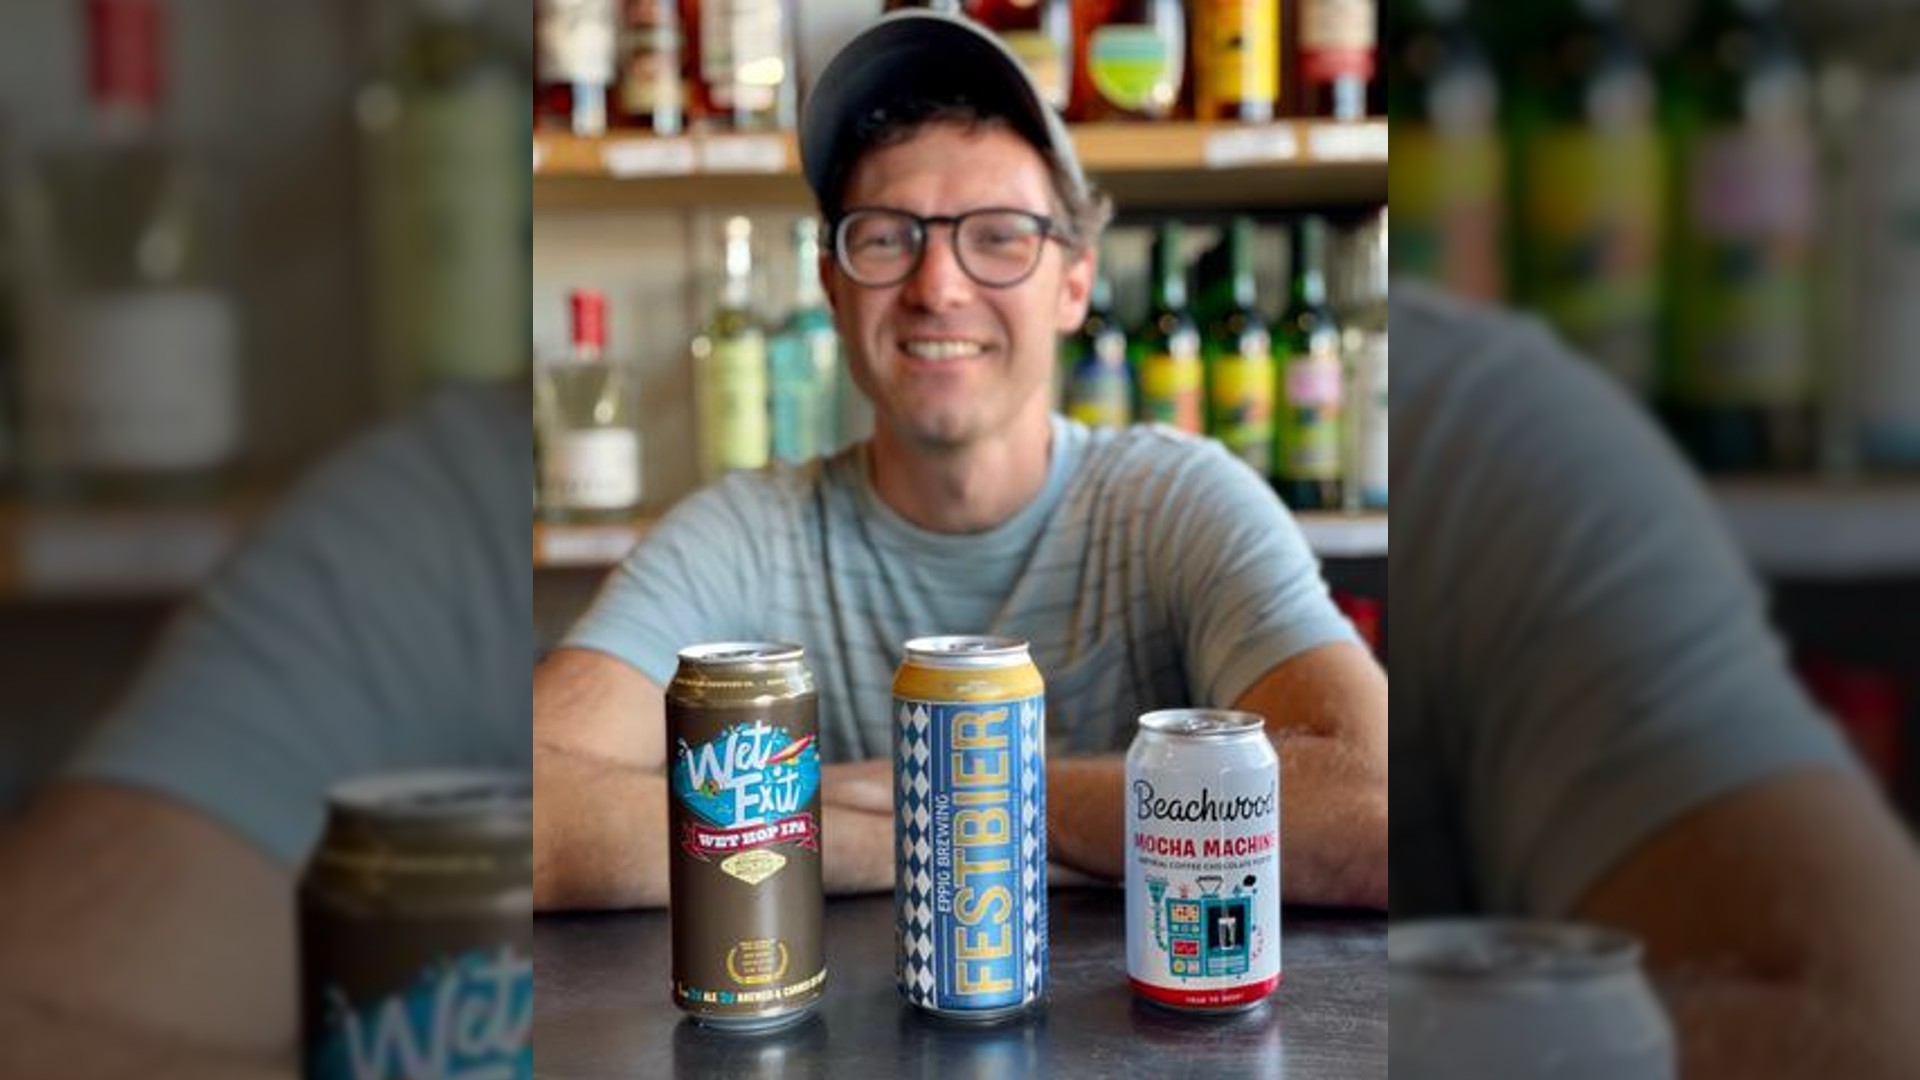 Gene's Beer Picks for the week of September 23, 2021 includes Kern River IPA, Eppig Fest Bier and Beachwood Mocha Machine Imperial Porter